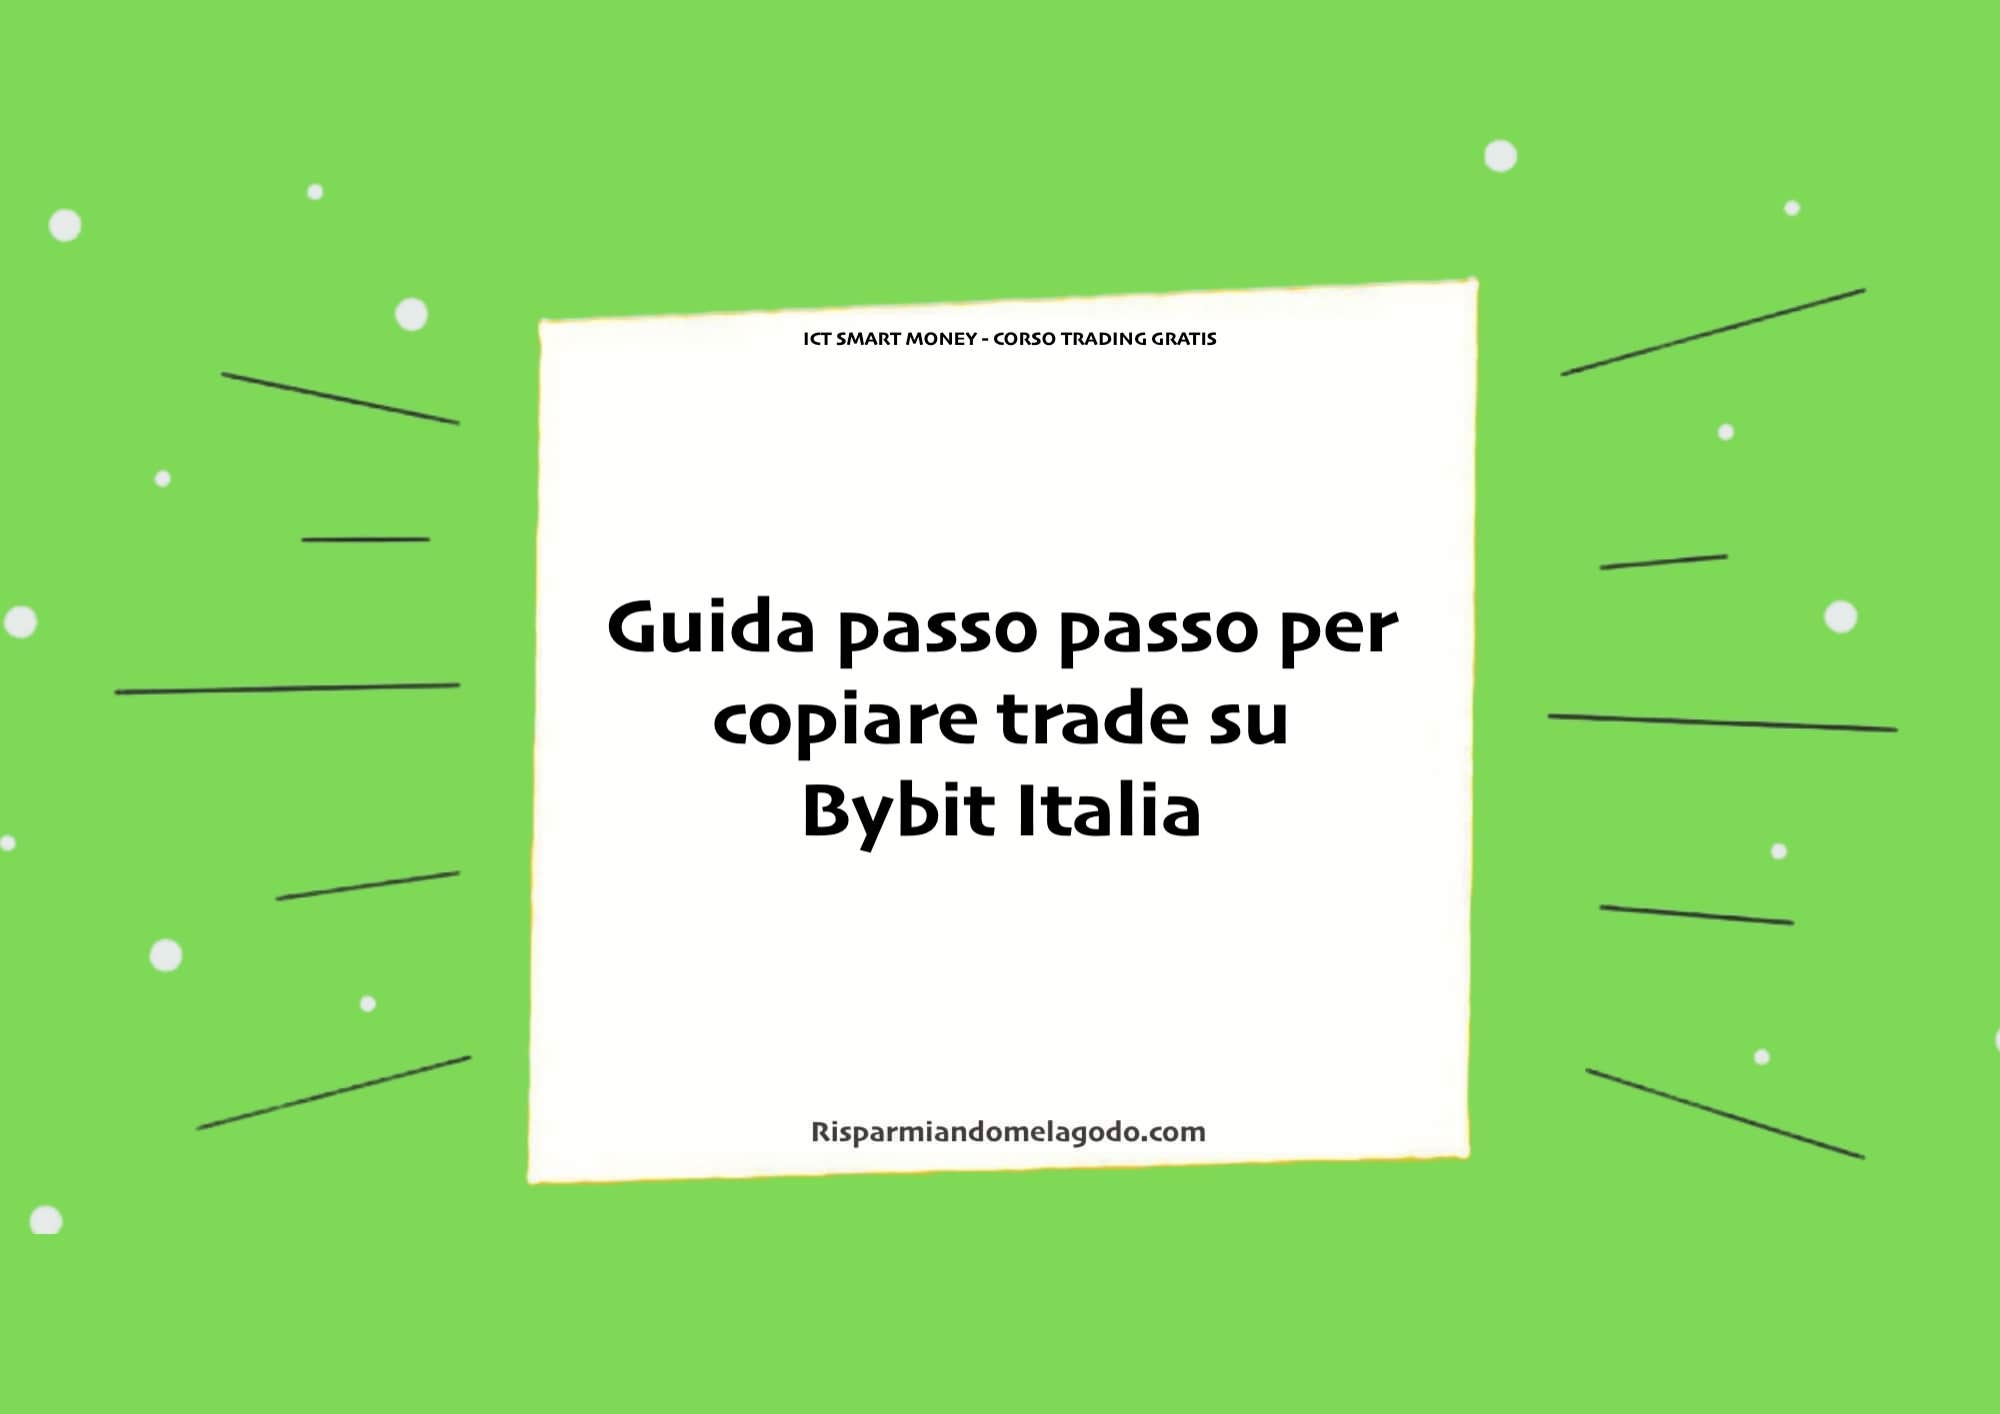 Guida passo passo per copiare trade su Bybit Italia